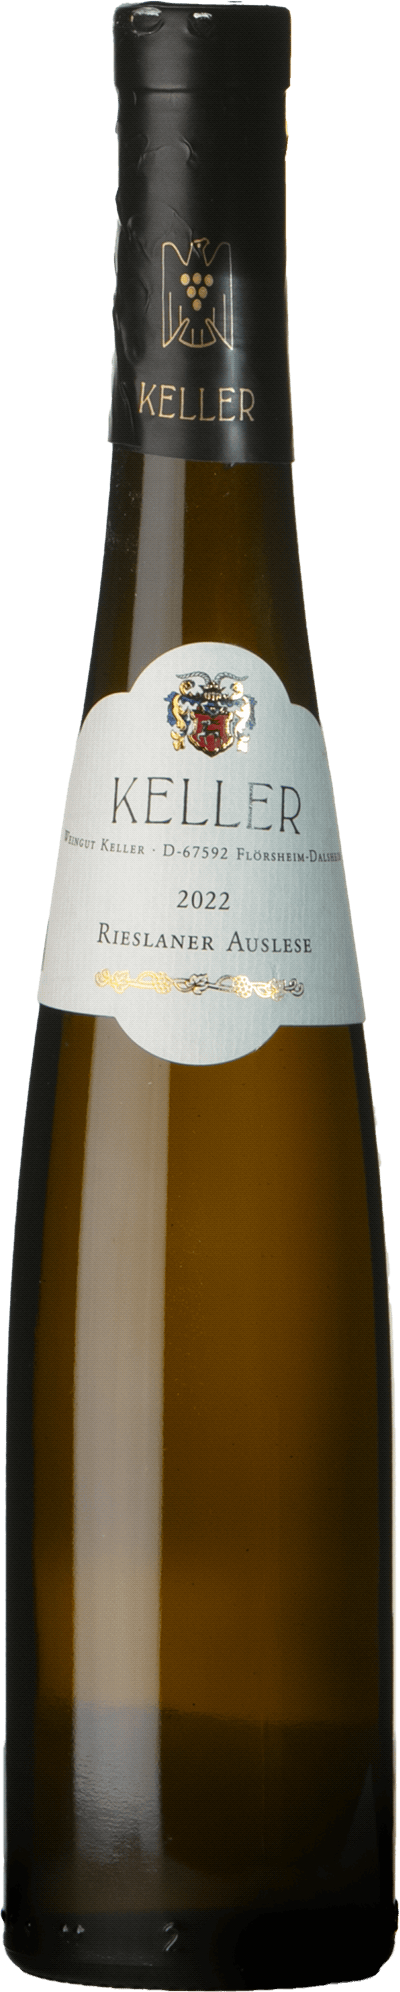 Weingut Keller Rieslaner Auslese